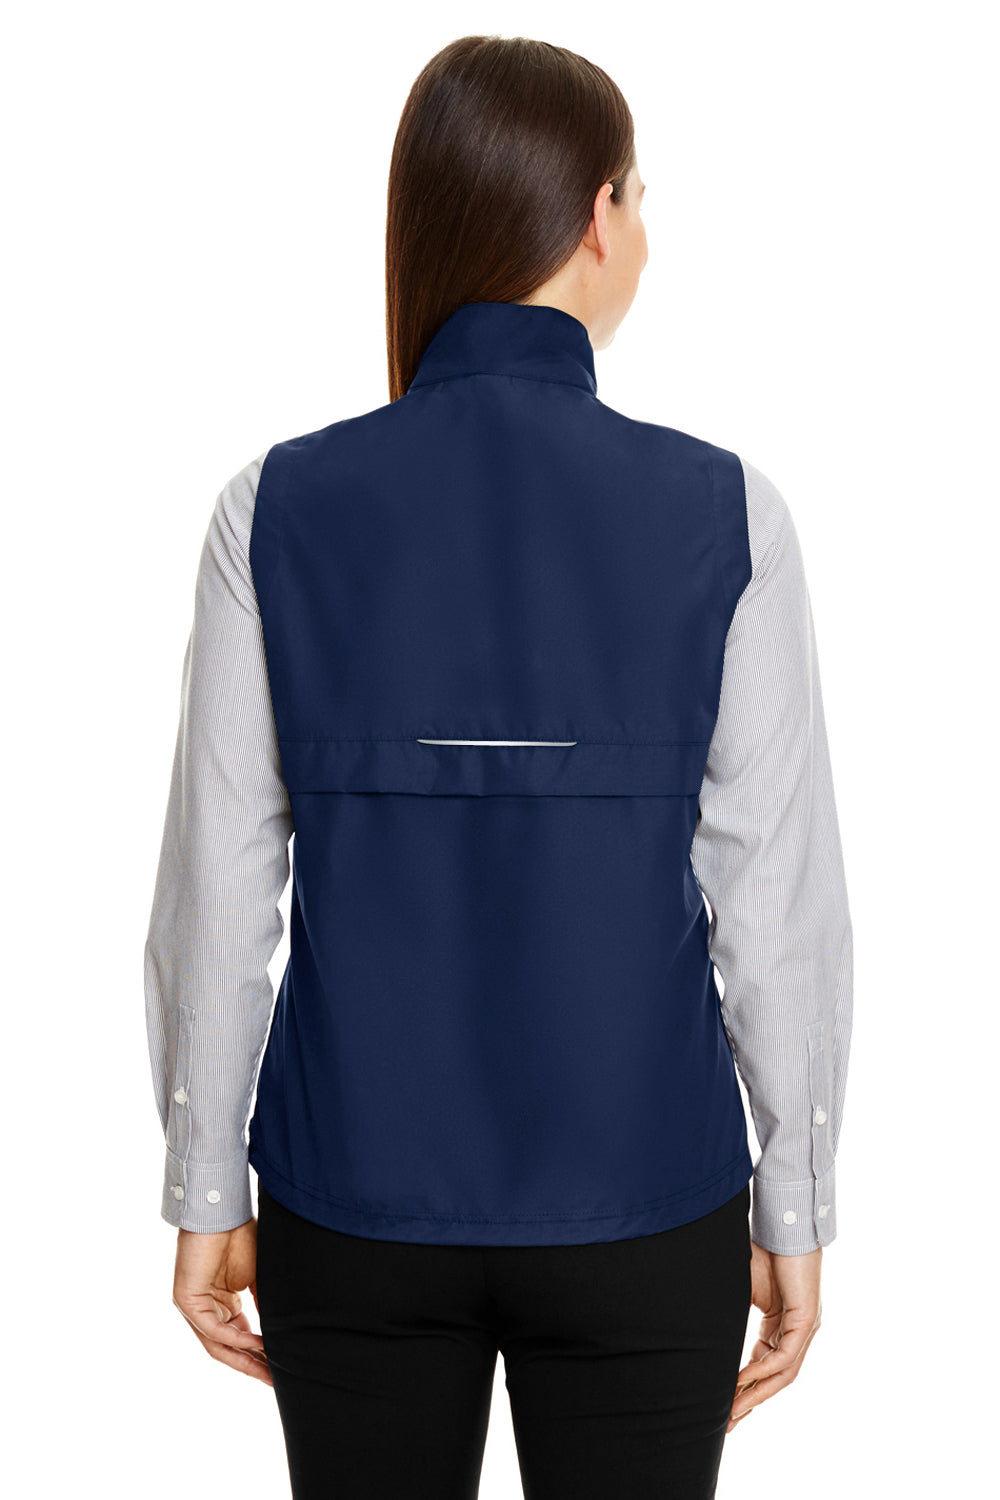 Core 365 CE703W Womens Techno Lite Water Resistant Full Zip Vest Navy Blue Back